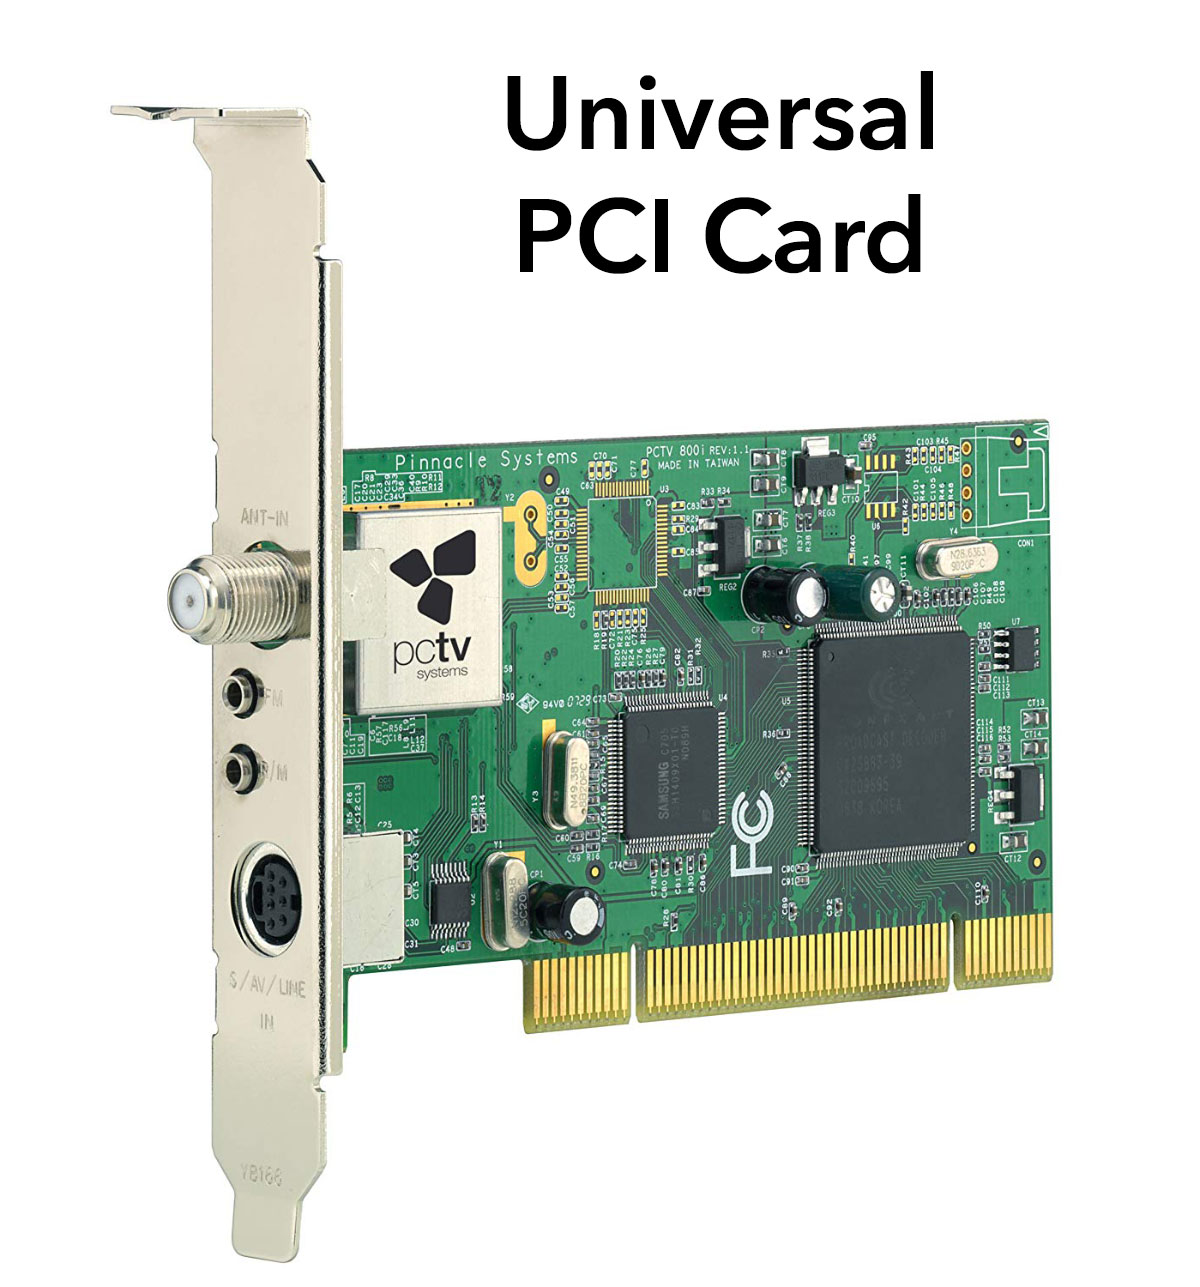 Pci definition. Шина PCI (peripheral component Interconnect). PCI карта. PCI Universal. PCI CPU Card.